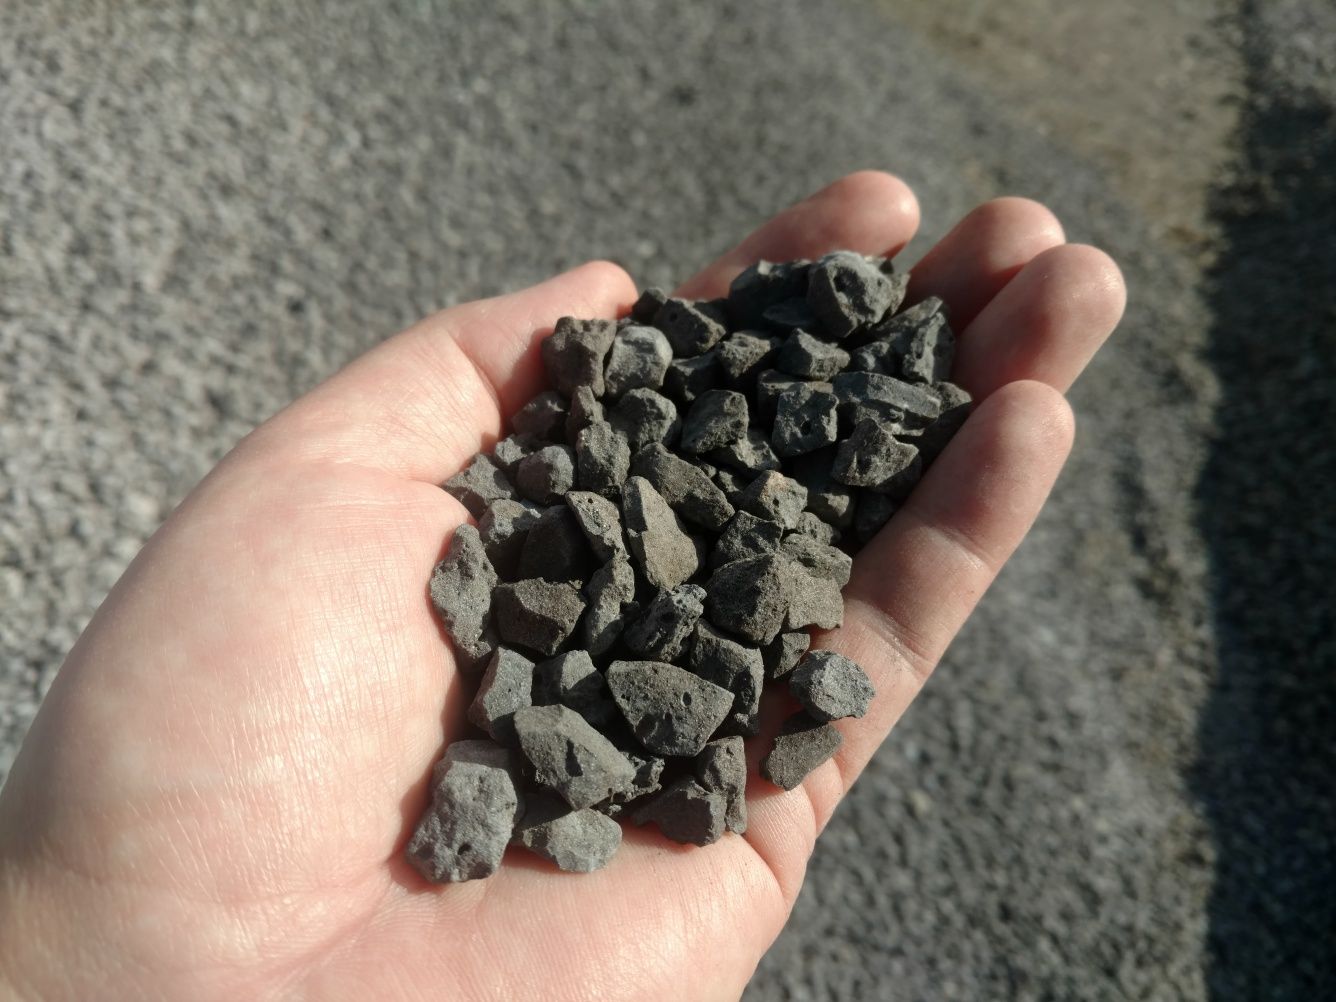 Wysiewka kruszywo hutnicze piasek kostka brukowa granitowa betonowa